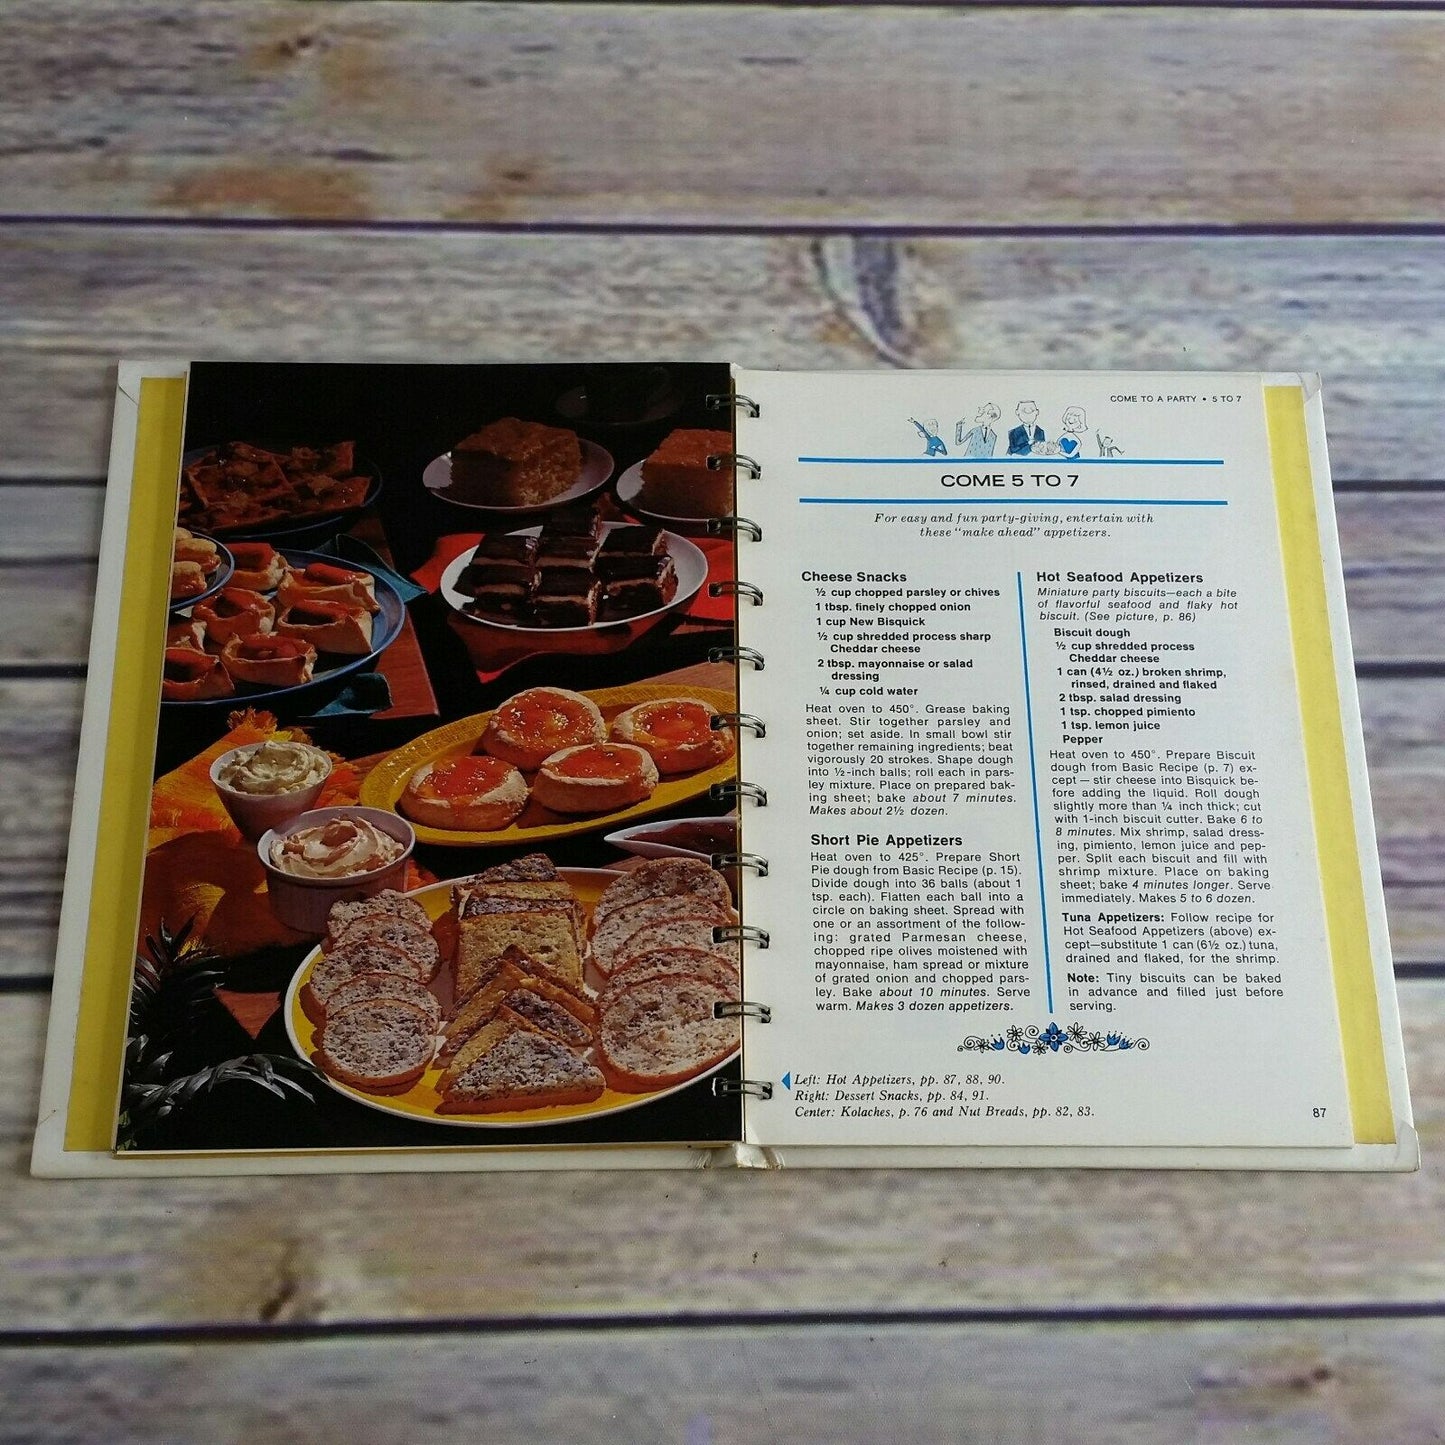 Vintage Cookbook Betty Crocker Bisquick Cookbook So Quick with New Bisquick 1967 Second Edition Spiral Bound Hardcover